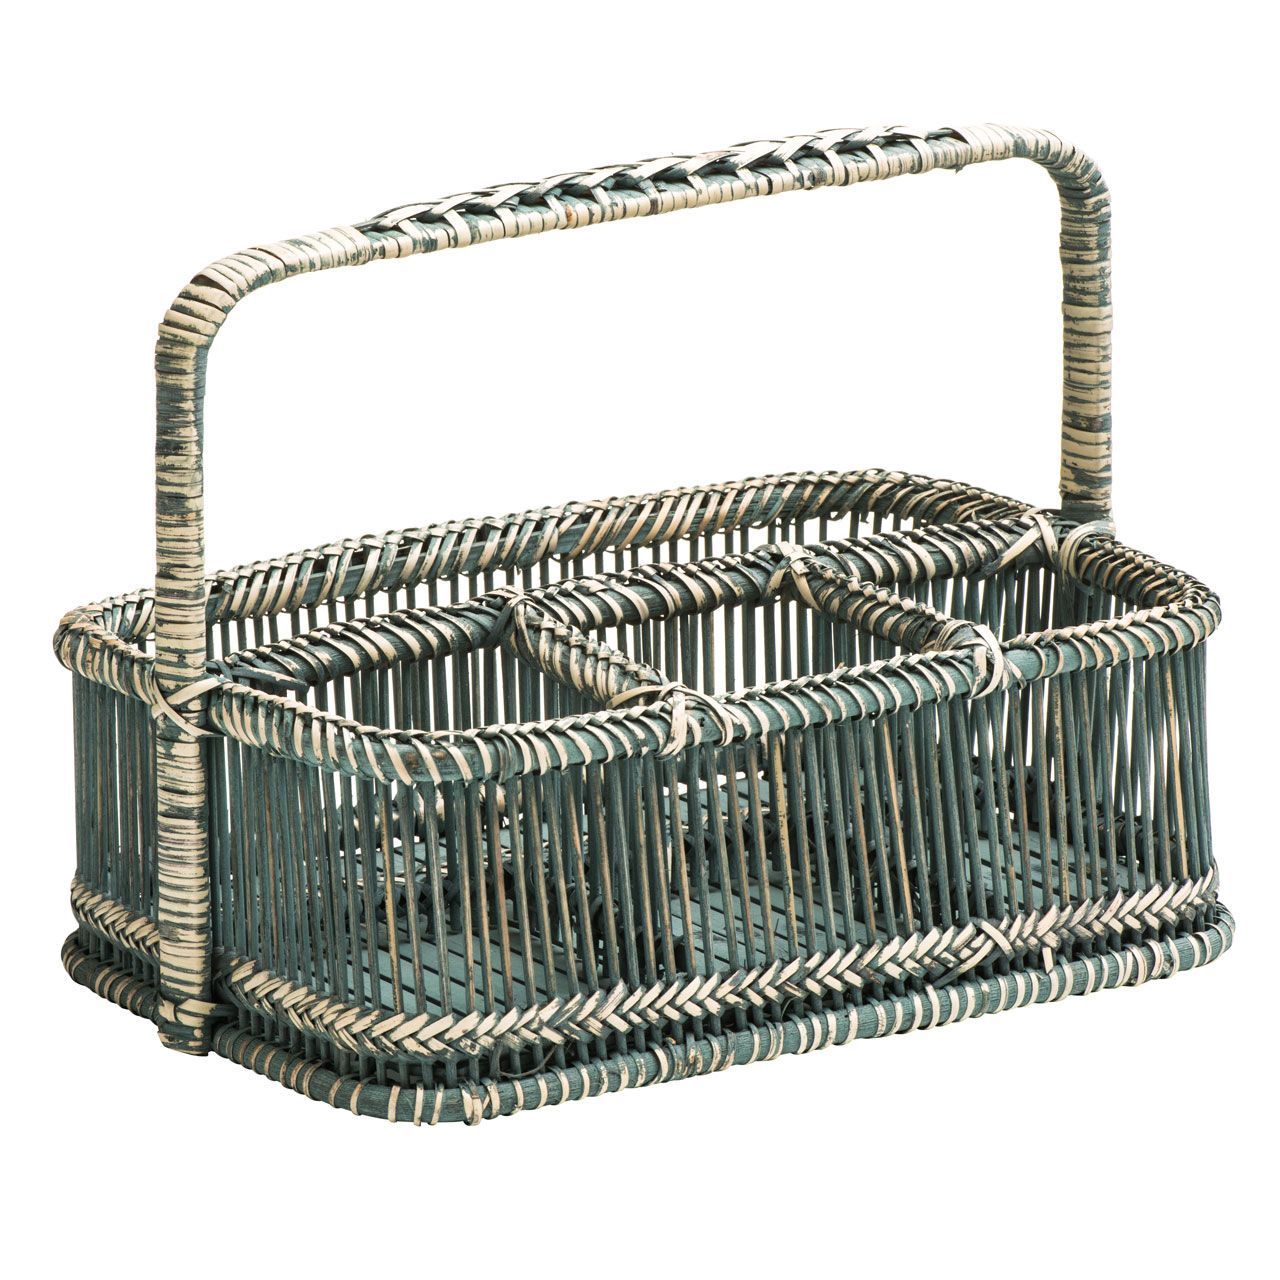 Homewares Rustic Grey Washed Rectangular Caddy Basket